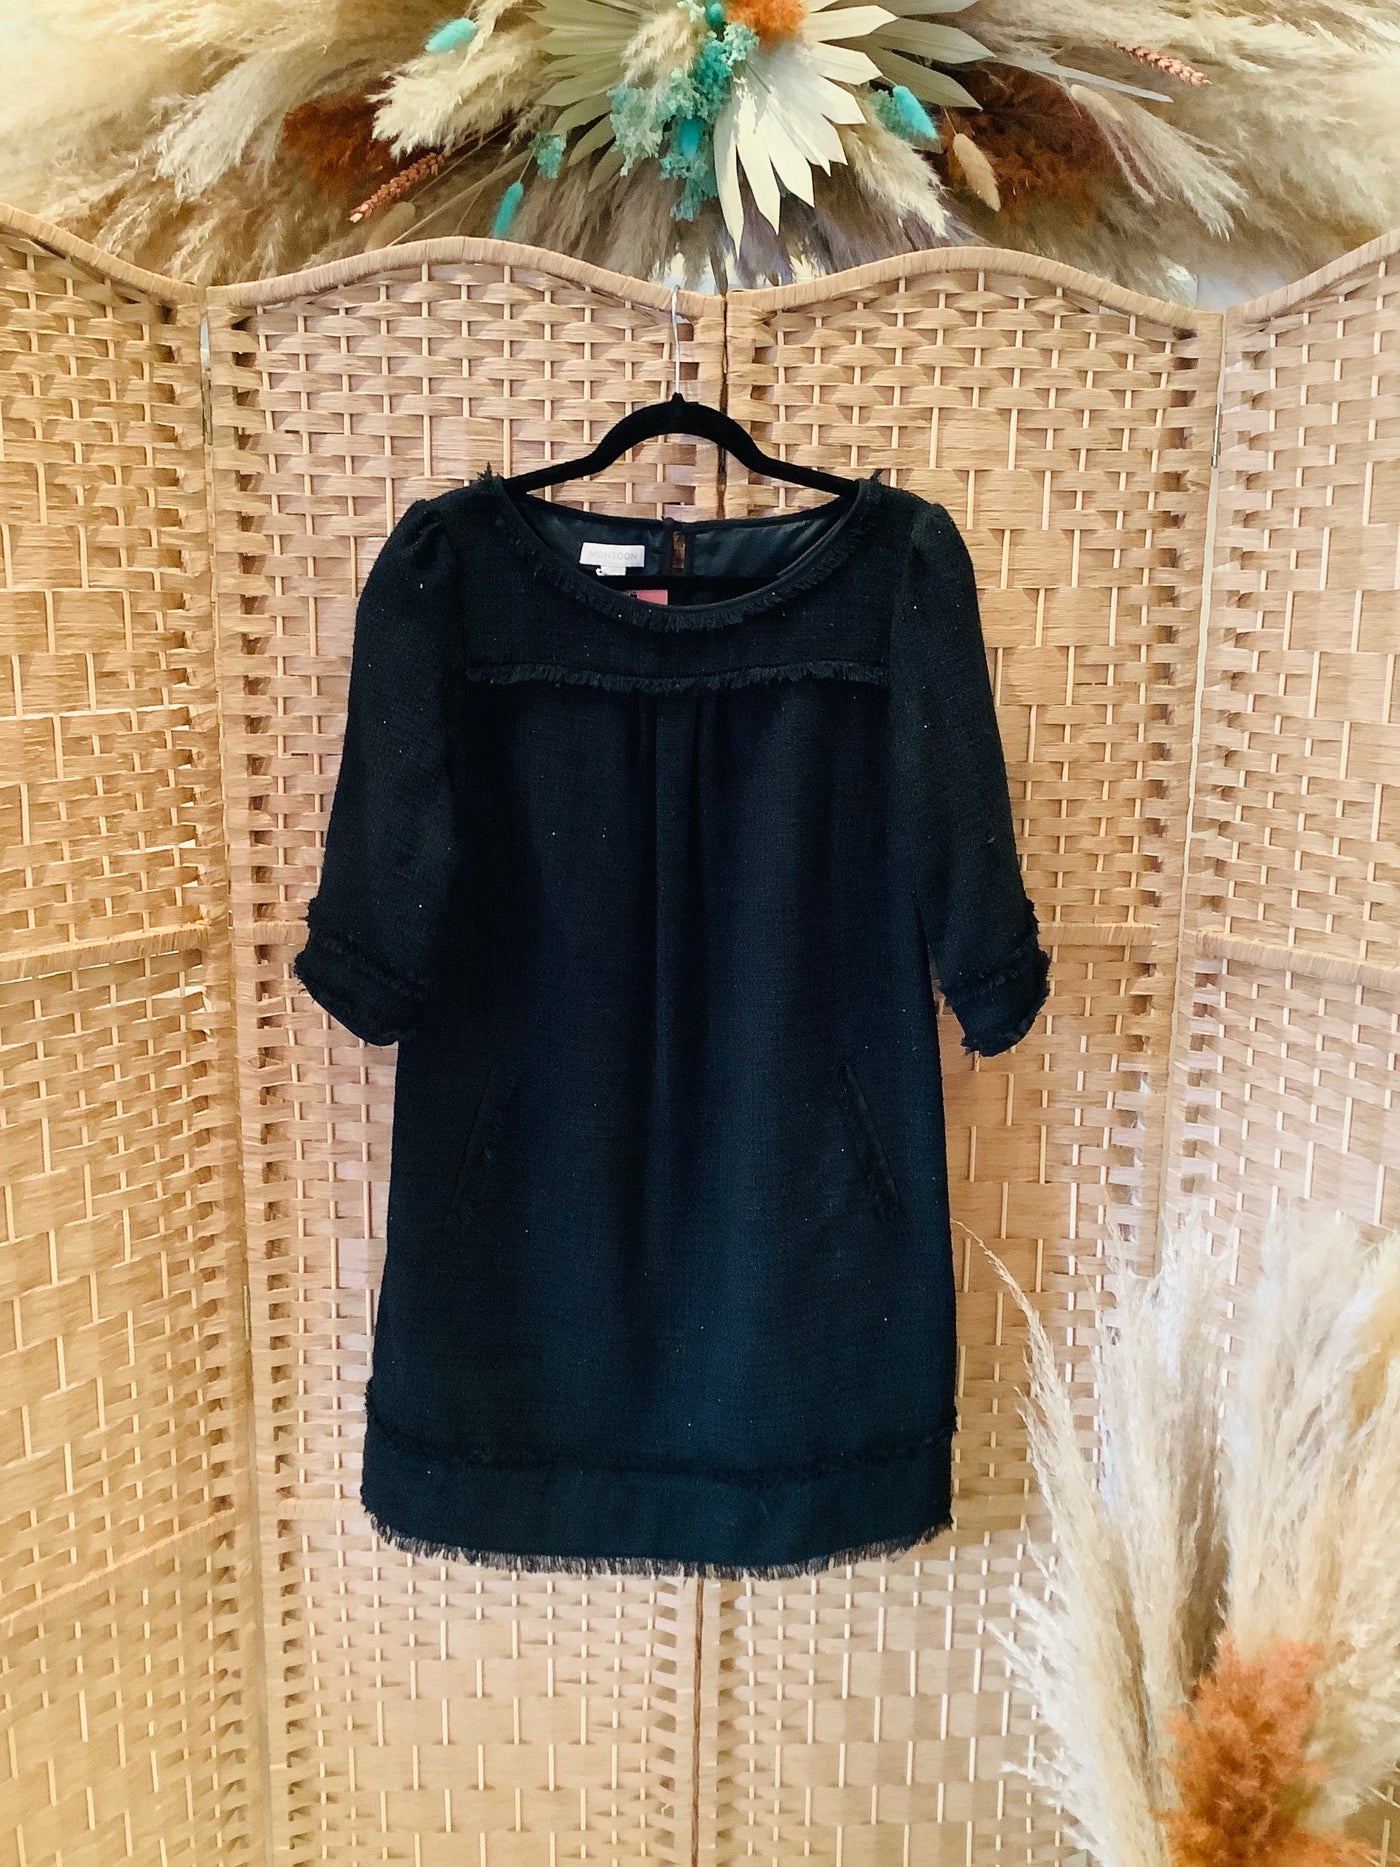 Monsoon Black Tweed Dress Size 16